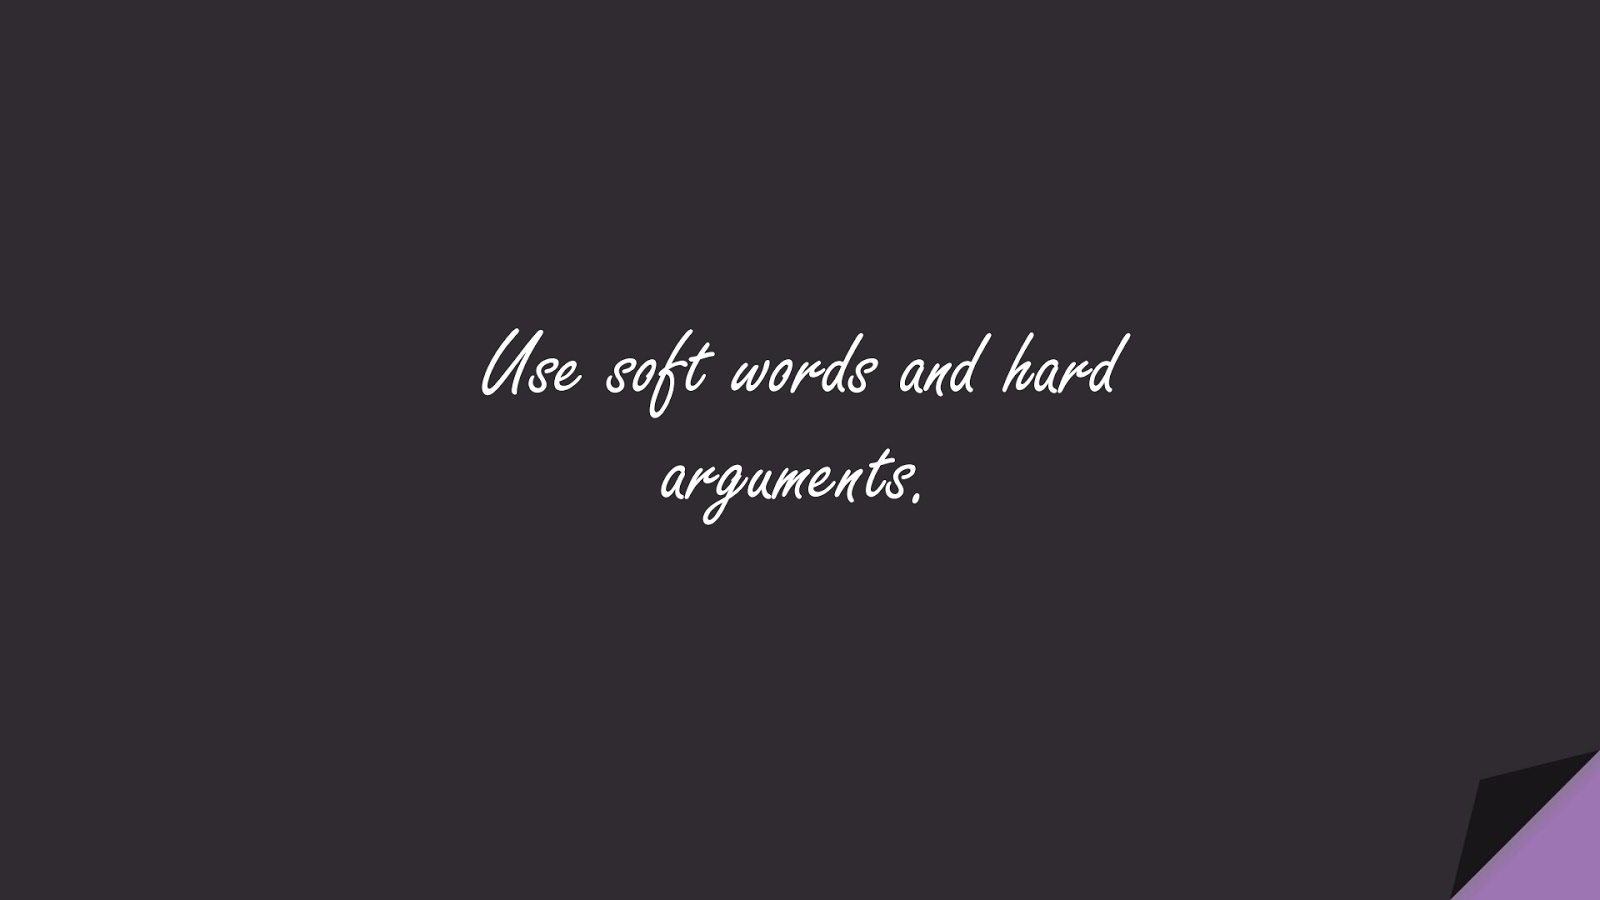 Use soft words and hard arguments.FALSE